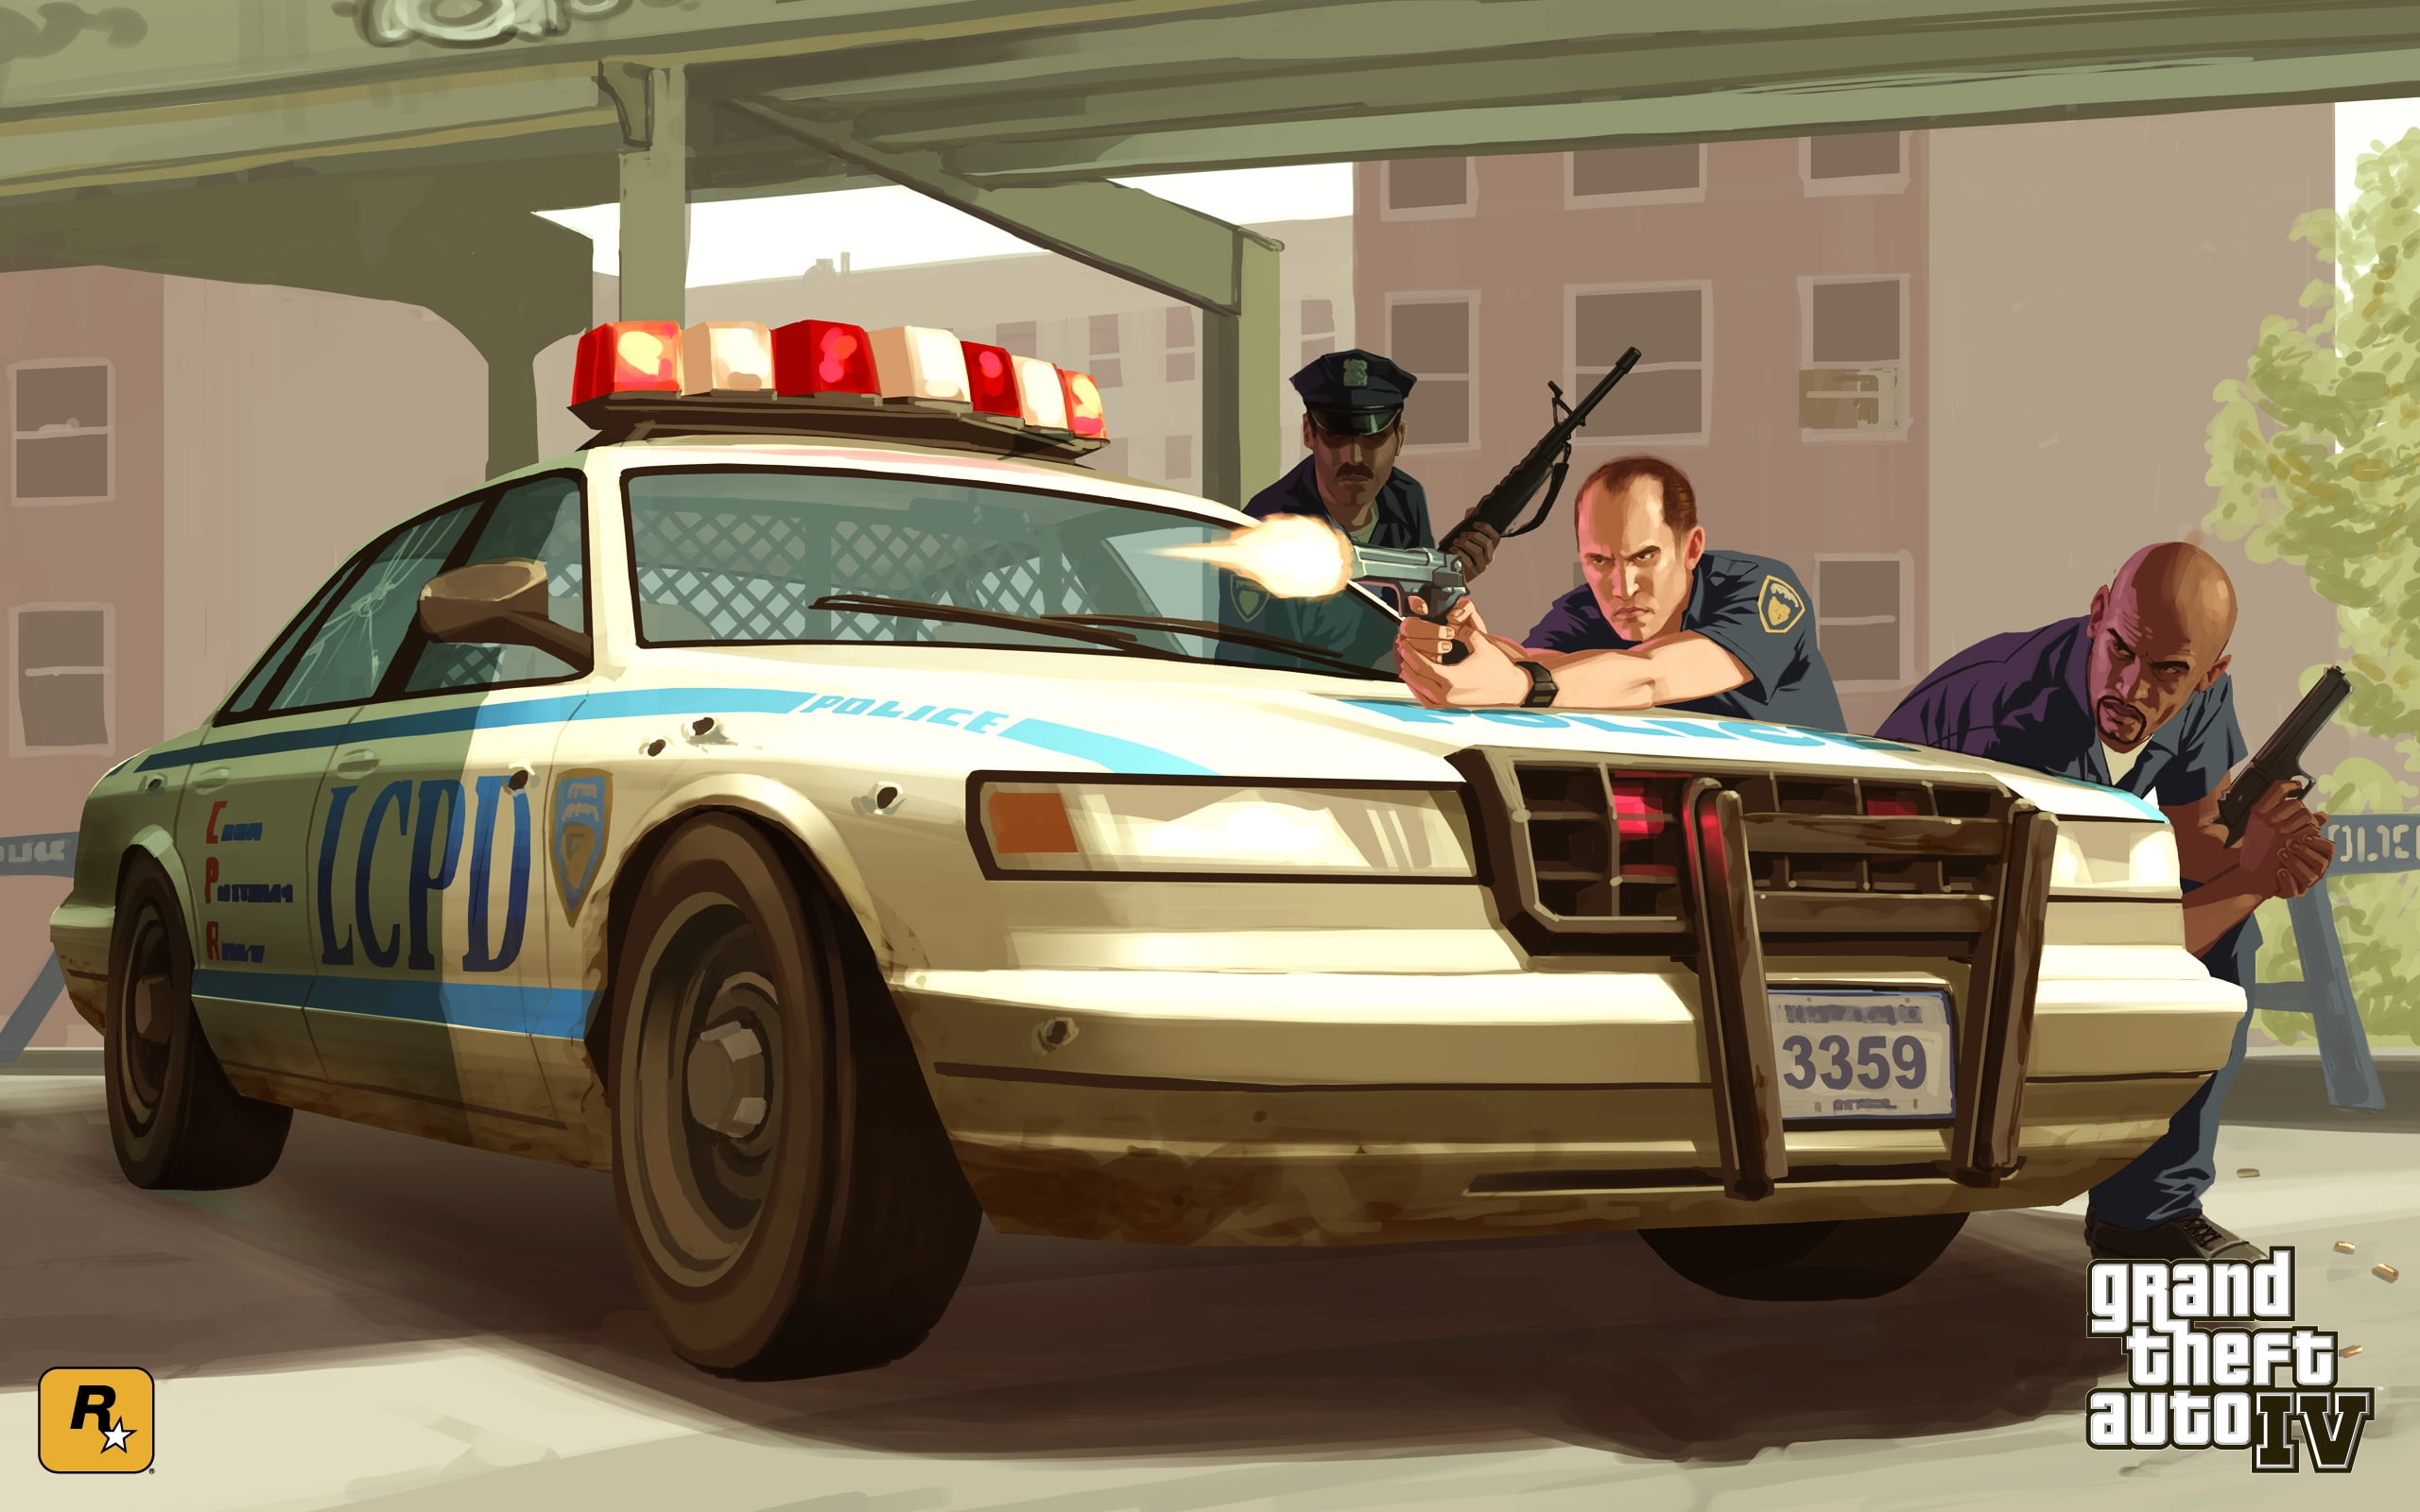 Grand Theft Auto five game